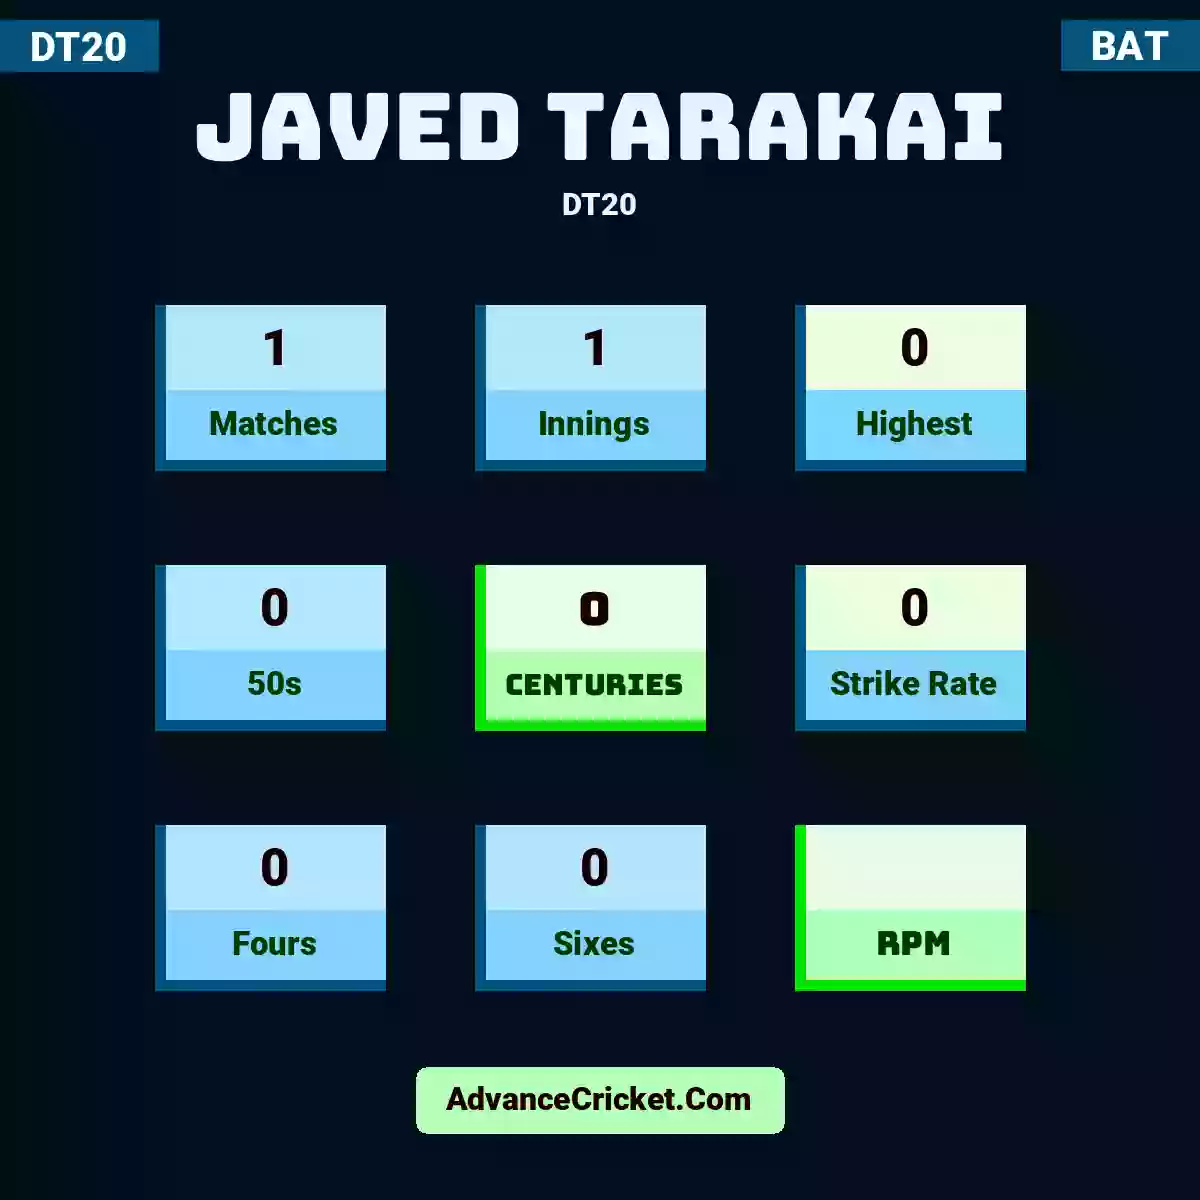 Javed Tarakai DT20 , Javed Tarakai played 1 matches, scored 0 runs as highest, 0 half-centuries, and 0 centuries, with a strike rate of 0. J.Tarakai hit 0 fours and 0 sixes.